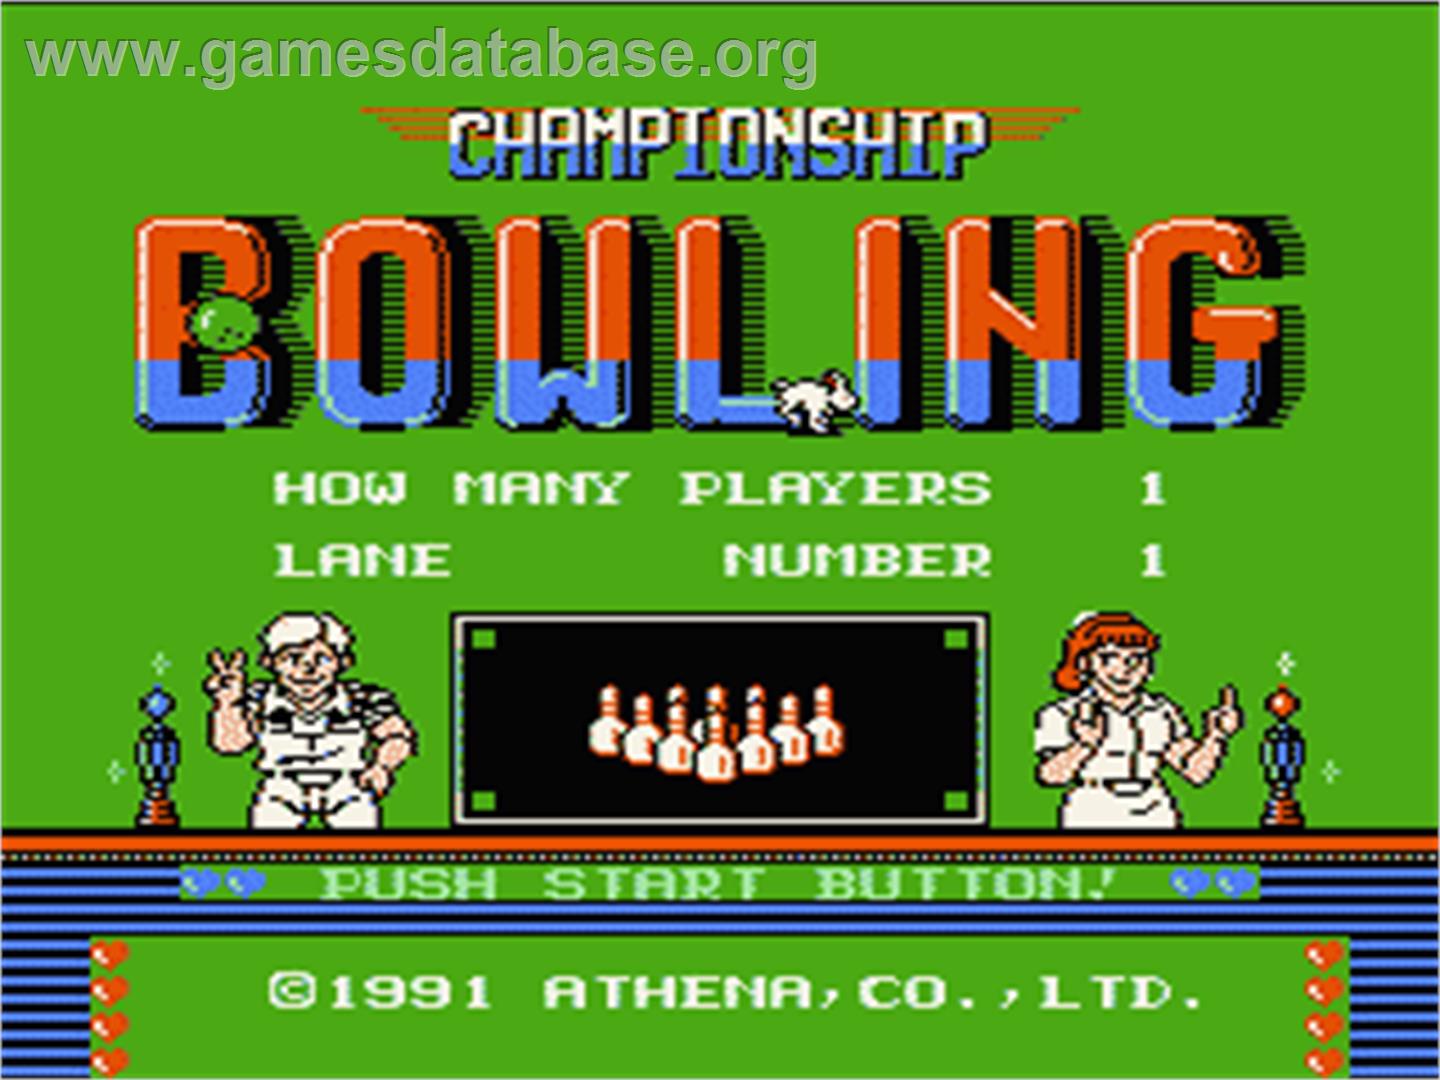 Championship Bowling - Nintendo NES - Artwork - Title Screen